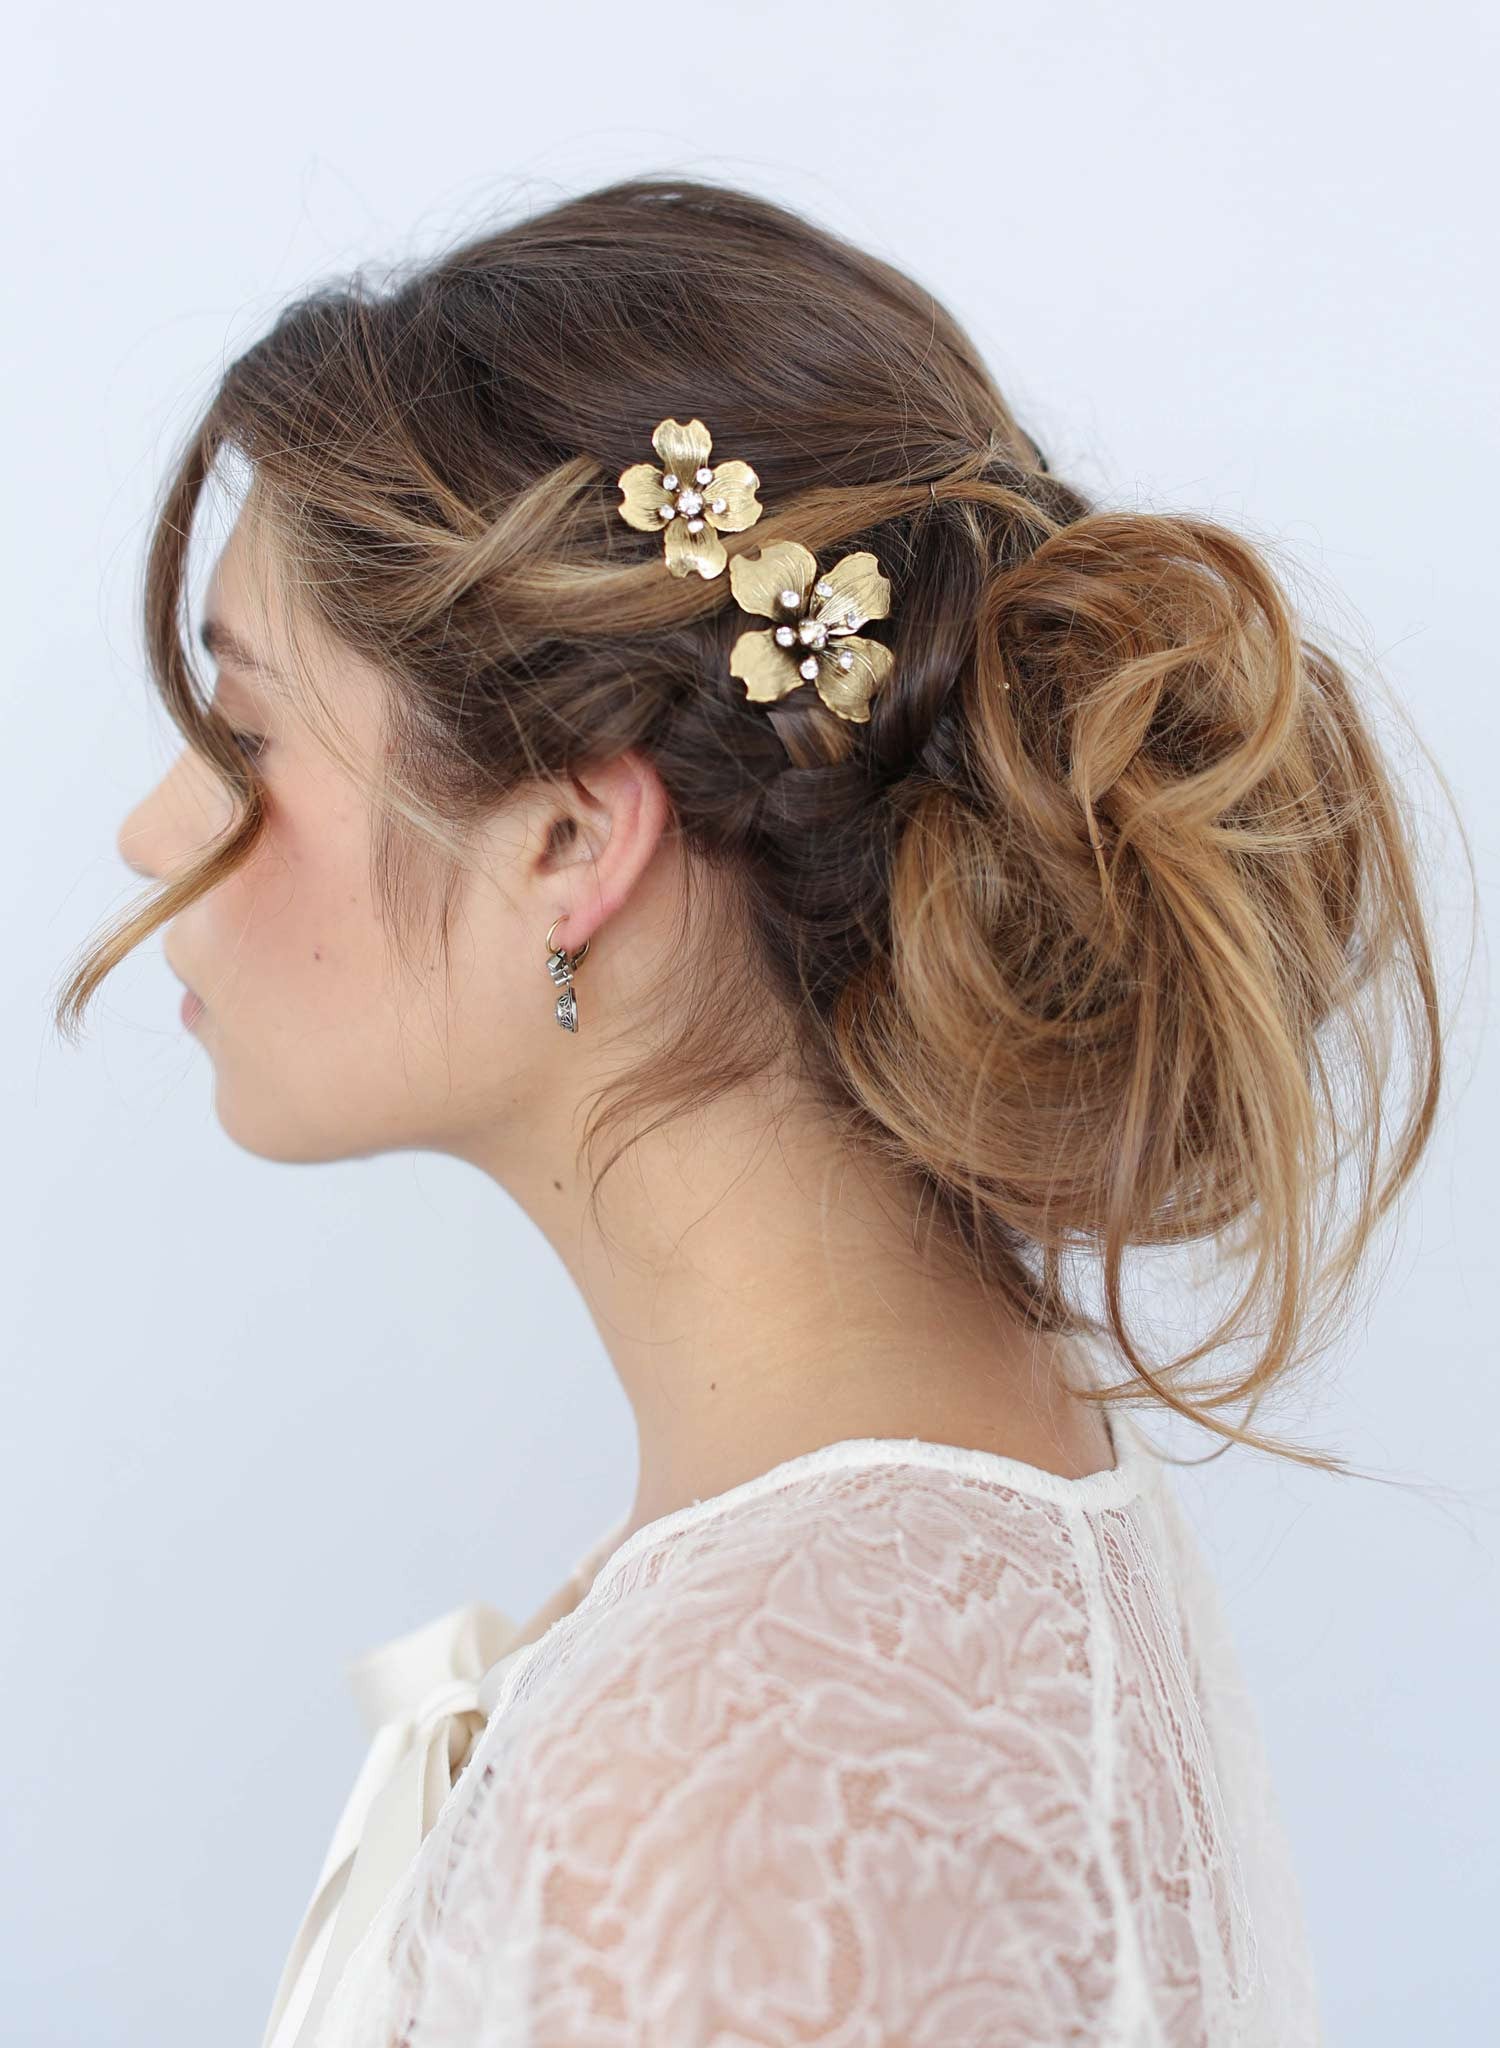 Dogwood flower hair pin set of 2 - Style #659